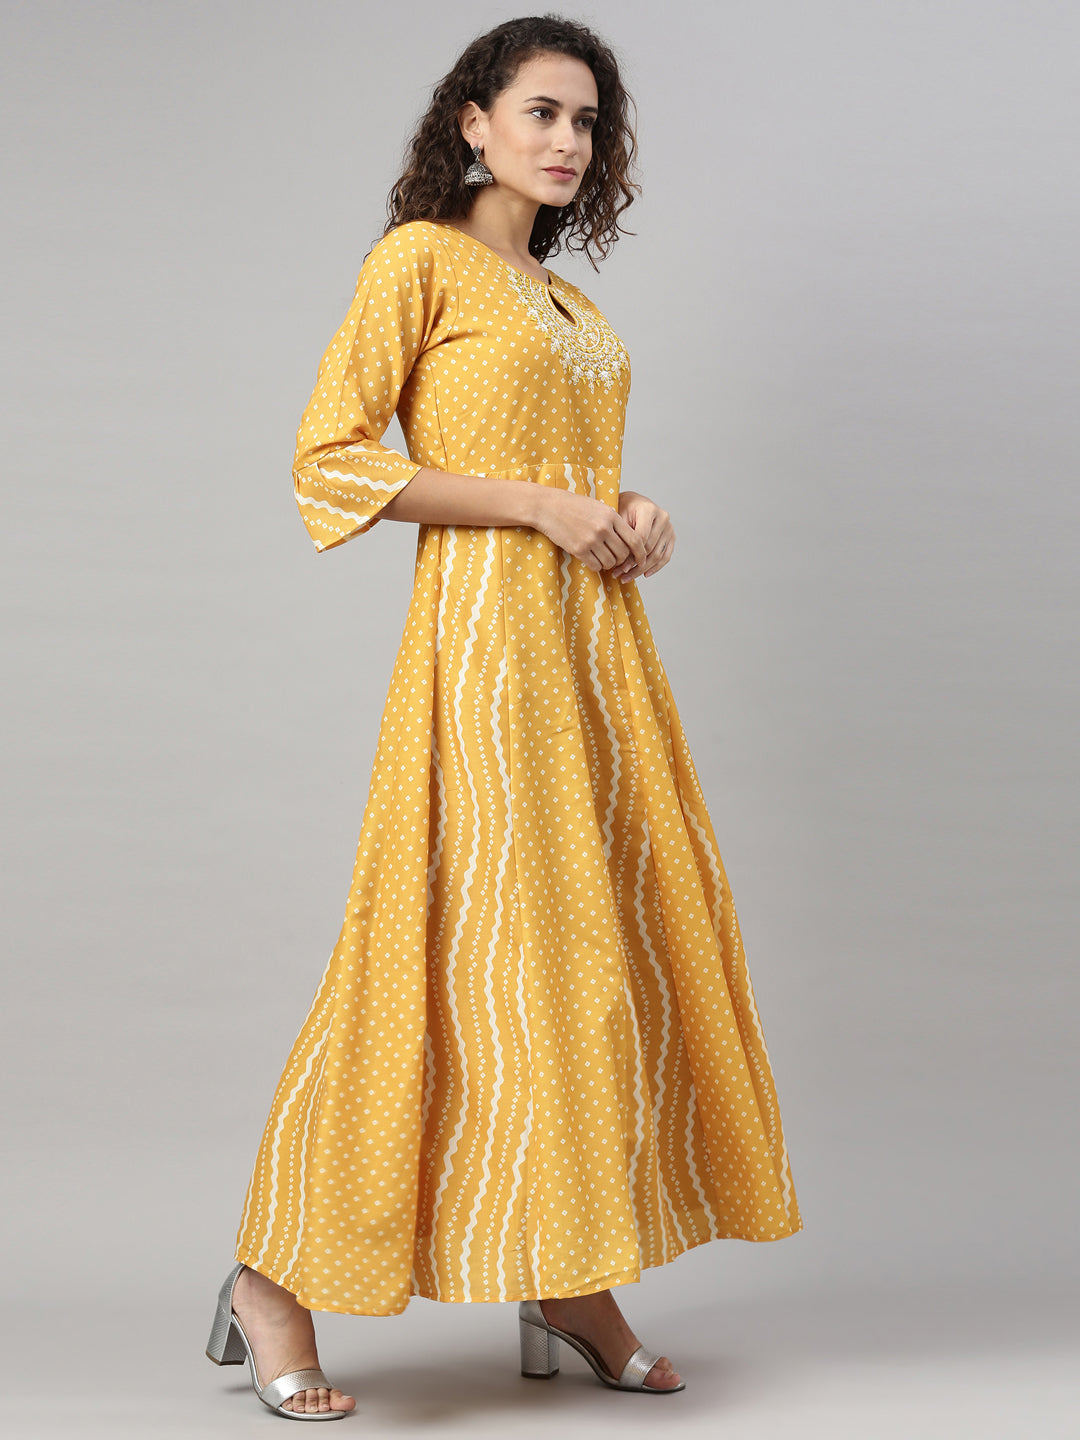 Neeru's Mustard Color Model Fabric Kurta